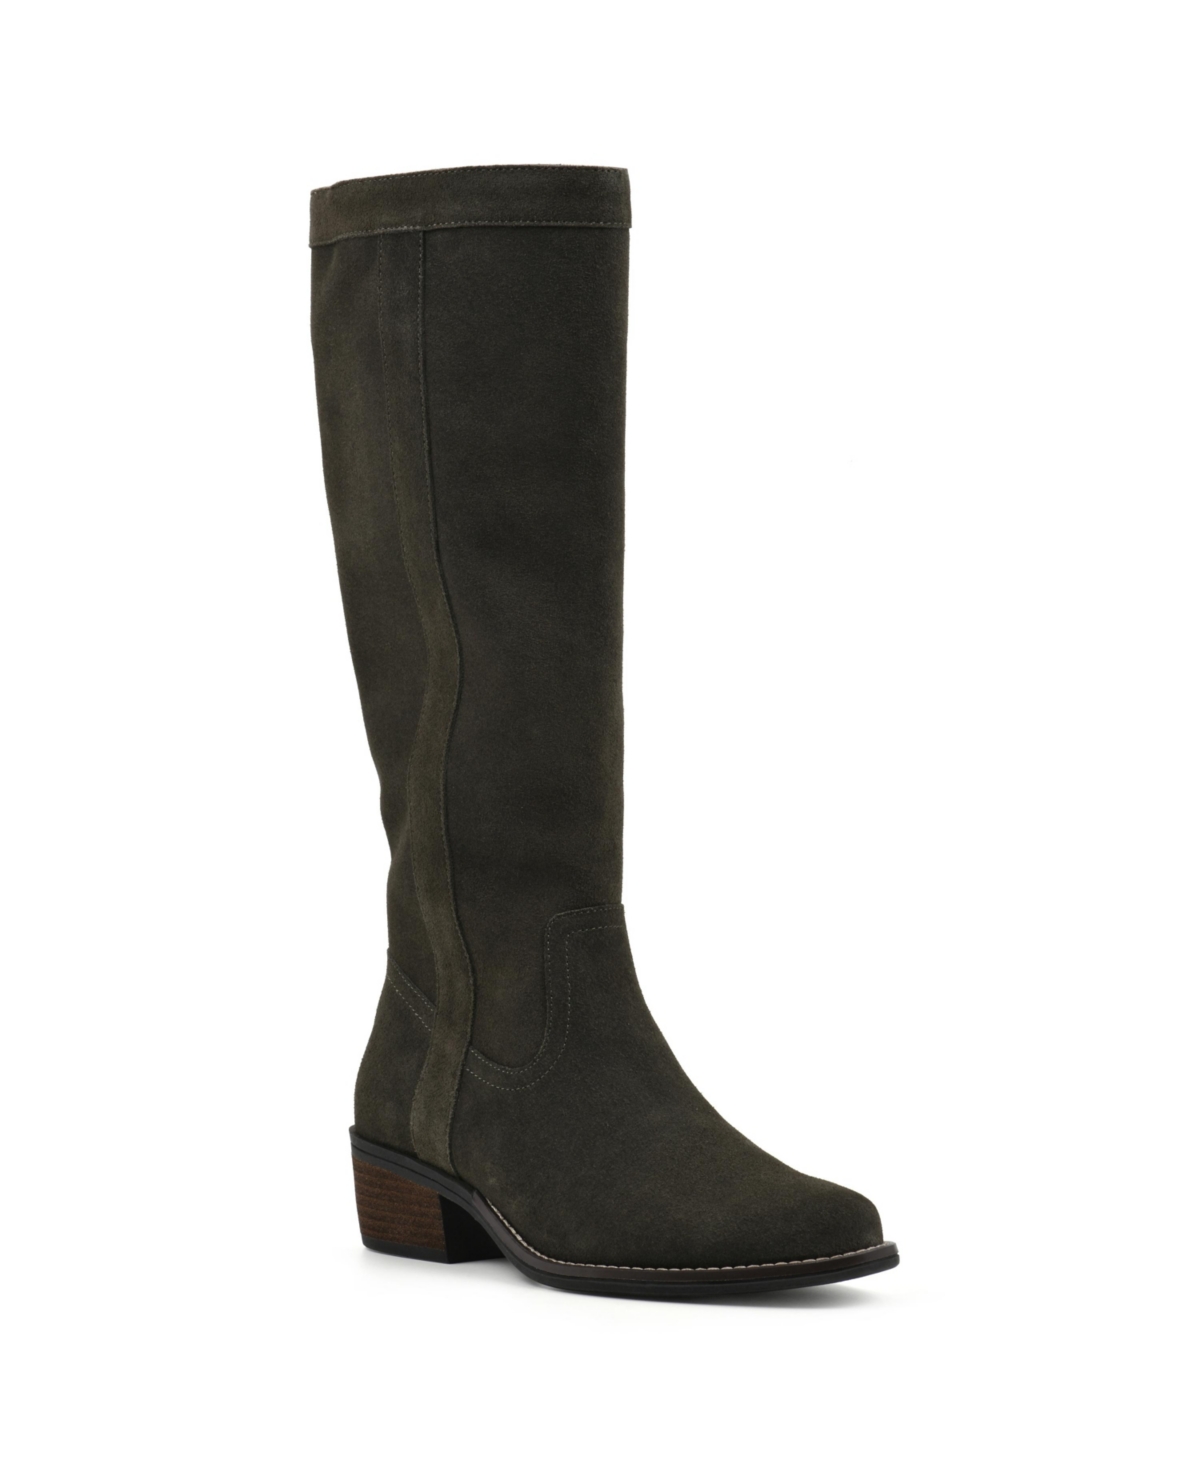 Women's Altitude Regular Calf Knee High Boots - Army Suede